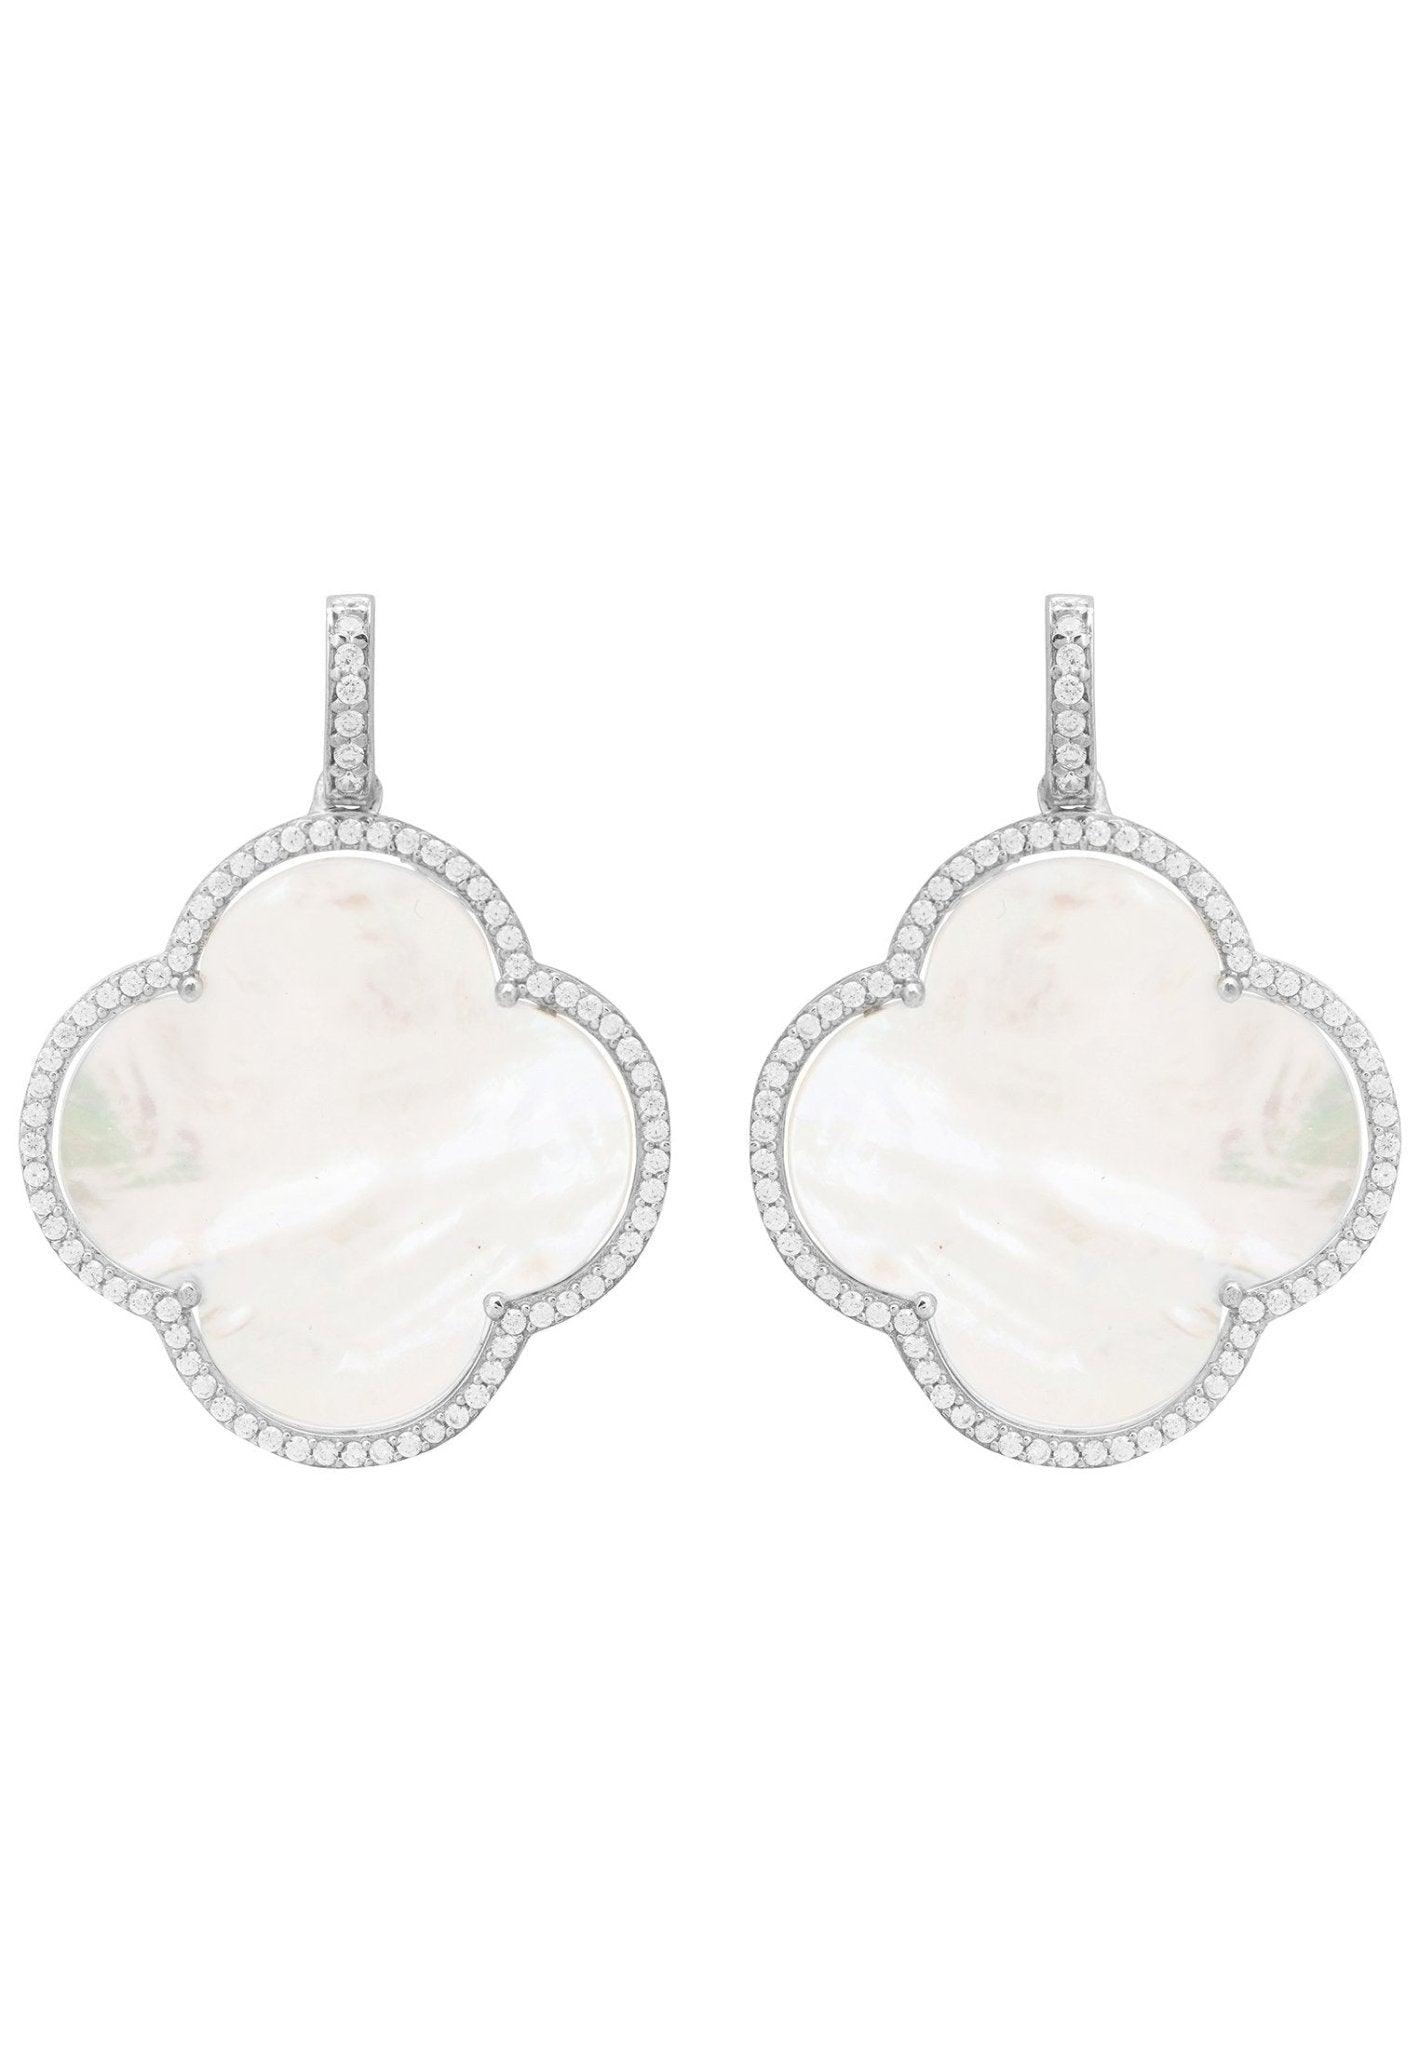 Open Clover Large Mother Of Pearl Gemstone Earrings Silver - Allure SocietyEarrings